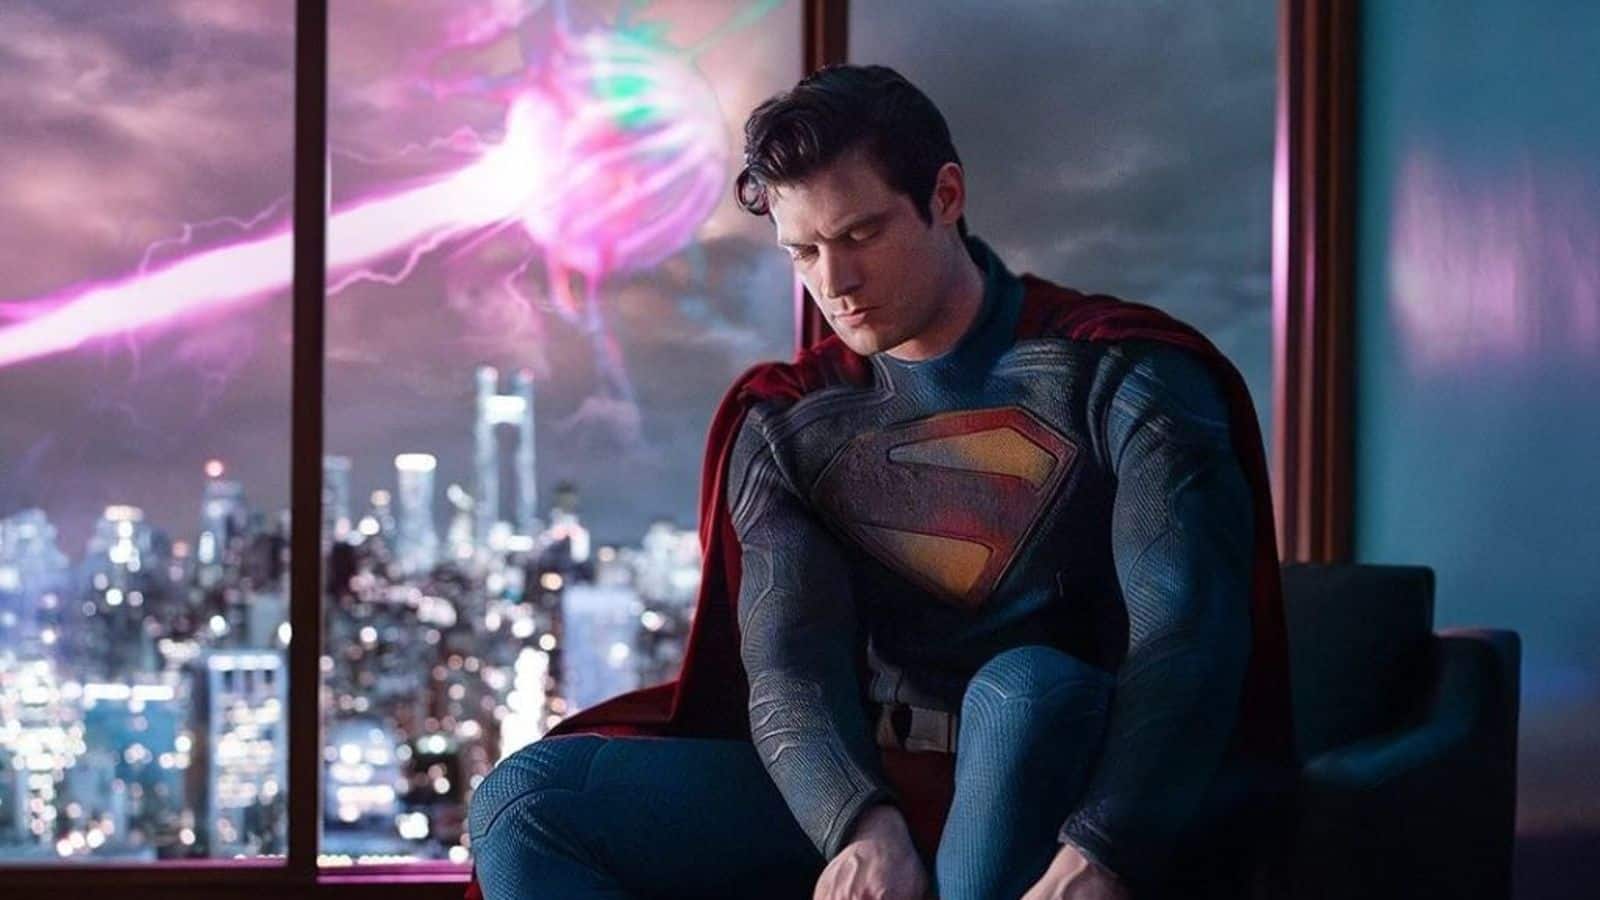 David Corenswet's new Superman costume shows promise